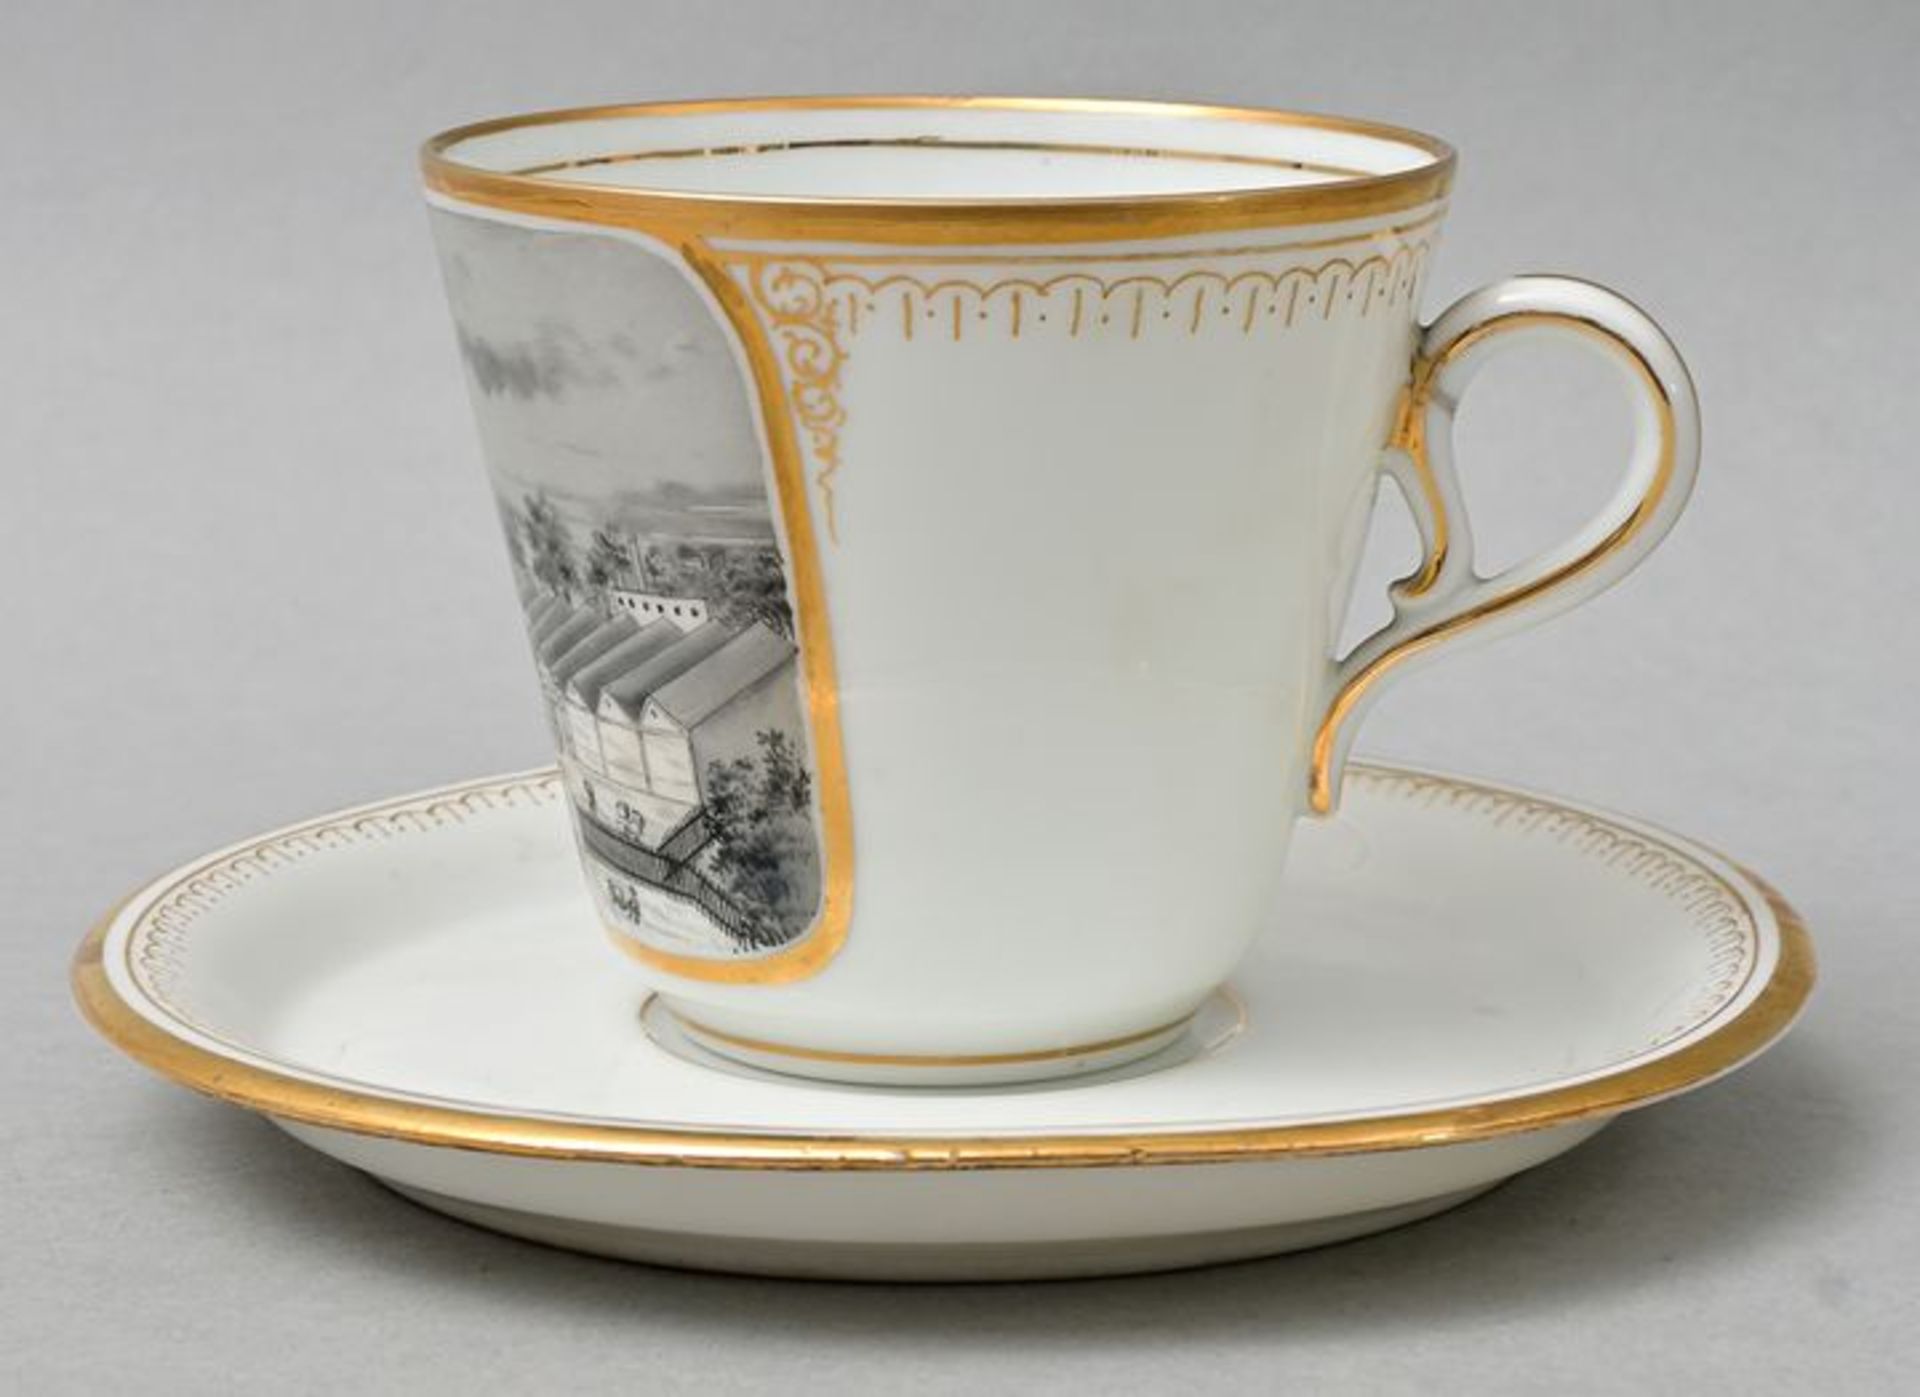 Tasse mit Untertasse/ cup with saucer - Image 2 of 5